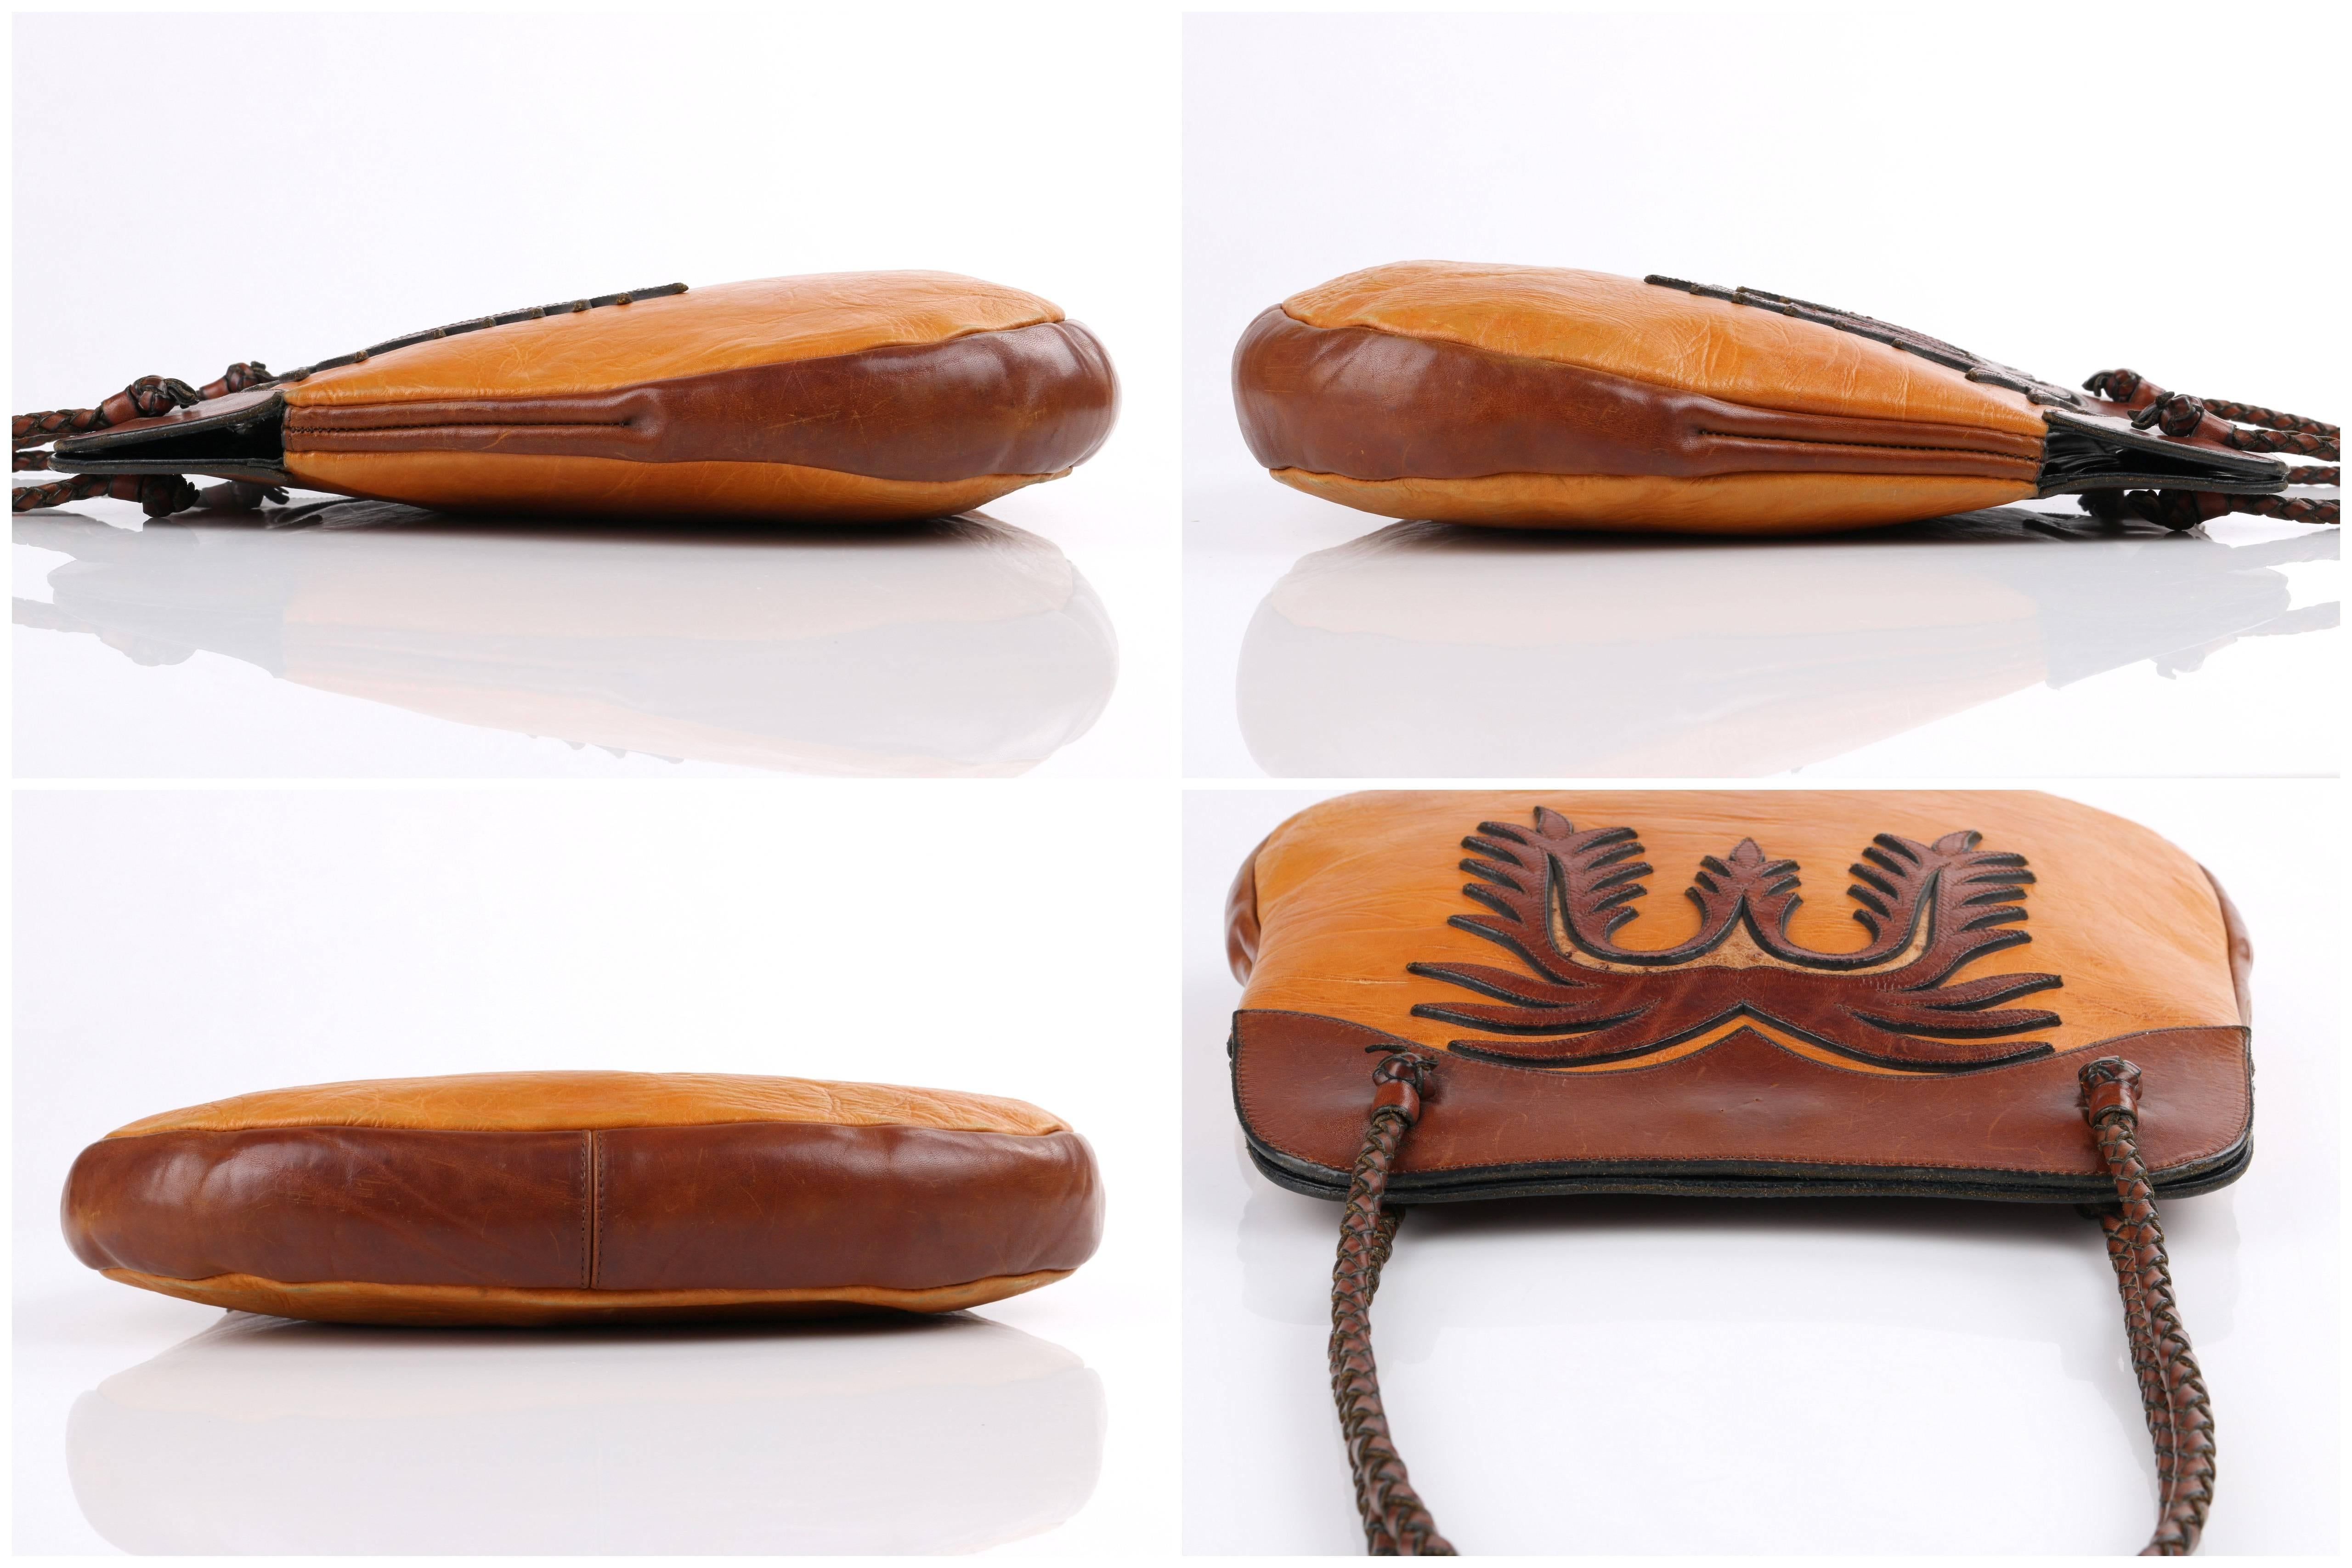 1970's leather purses